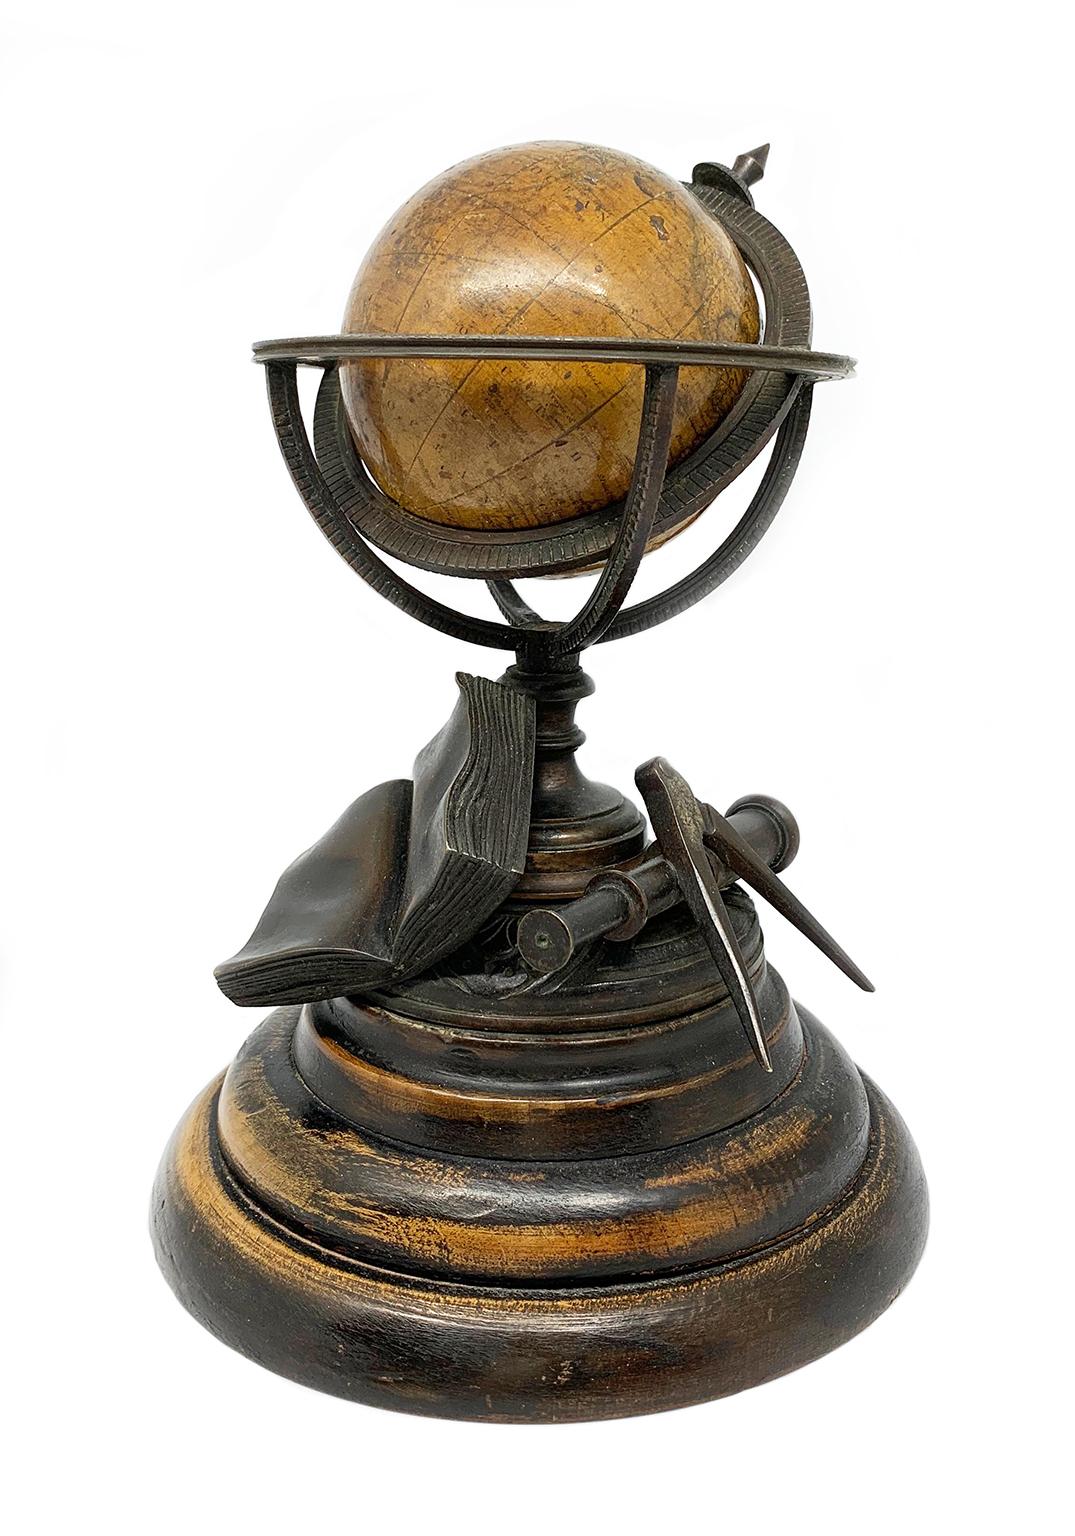 Miniature Terrestrial Globe
Newton & Son
London, post 1833, ante 1858
Paper, papier-mâché, bronze and wood
It measures: sphere diameter 2.95 in (7.6 cm); diameter of the wooden base 6.02 in (15.3 cm); height 8.36 in (21.24 cm).
Weight: 2,067